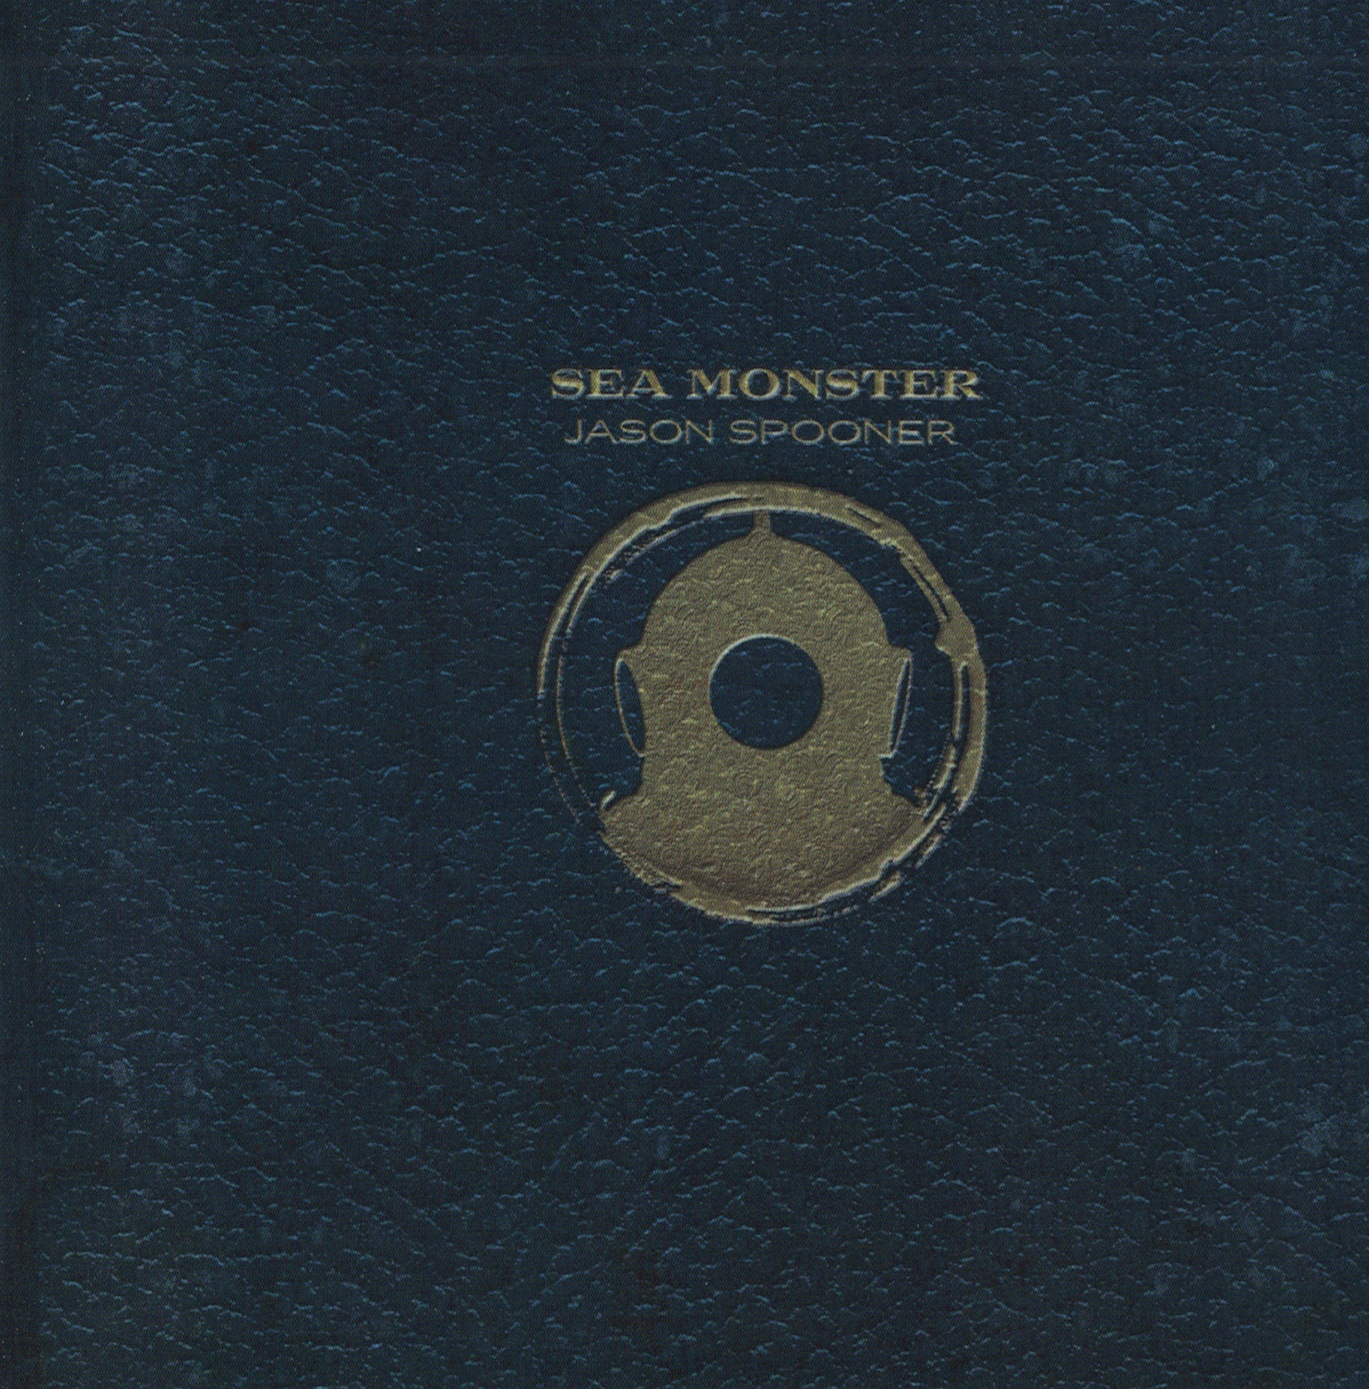 Jason Spooner - Sea Monster - cover art and links to song lyrics